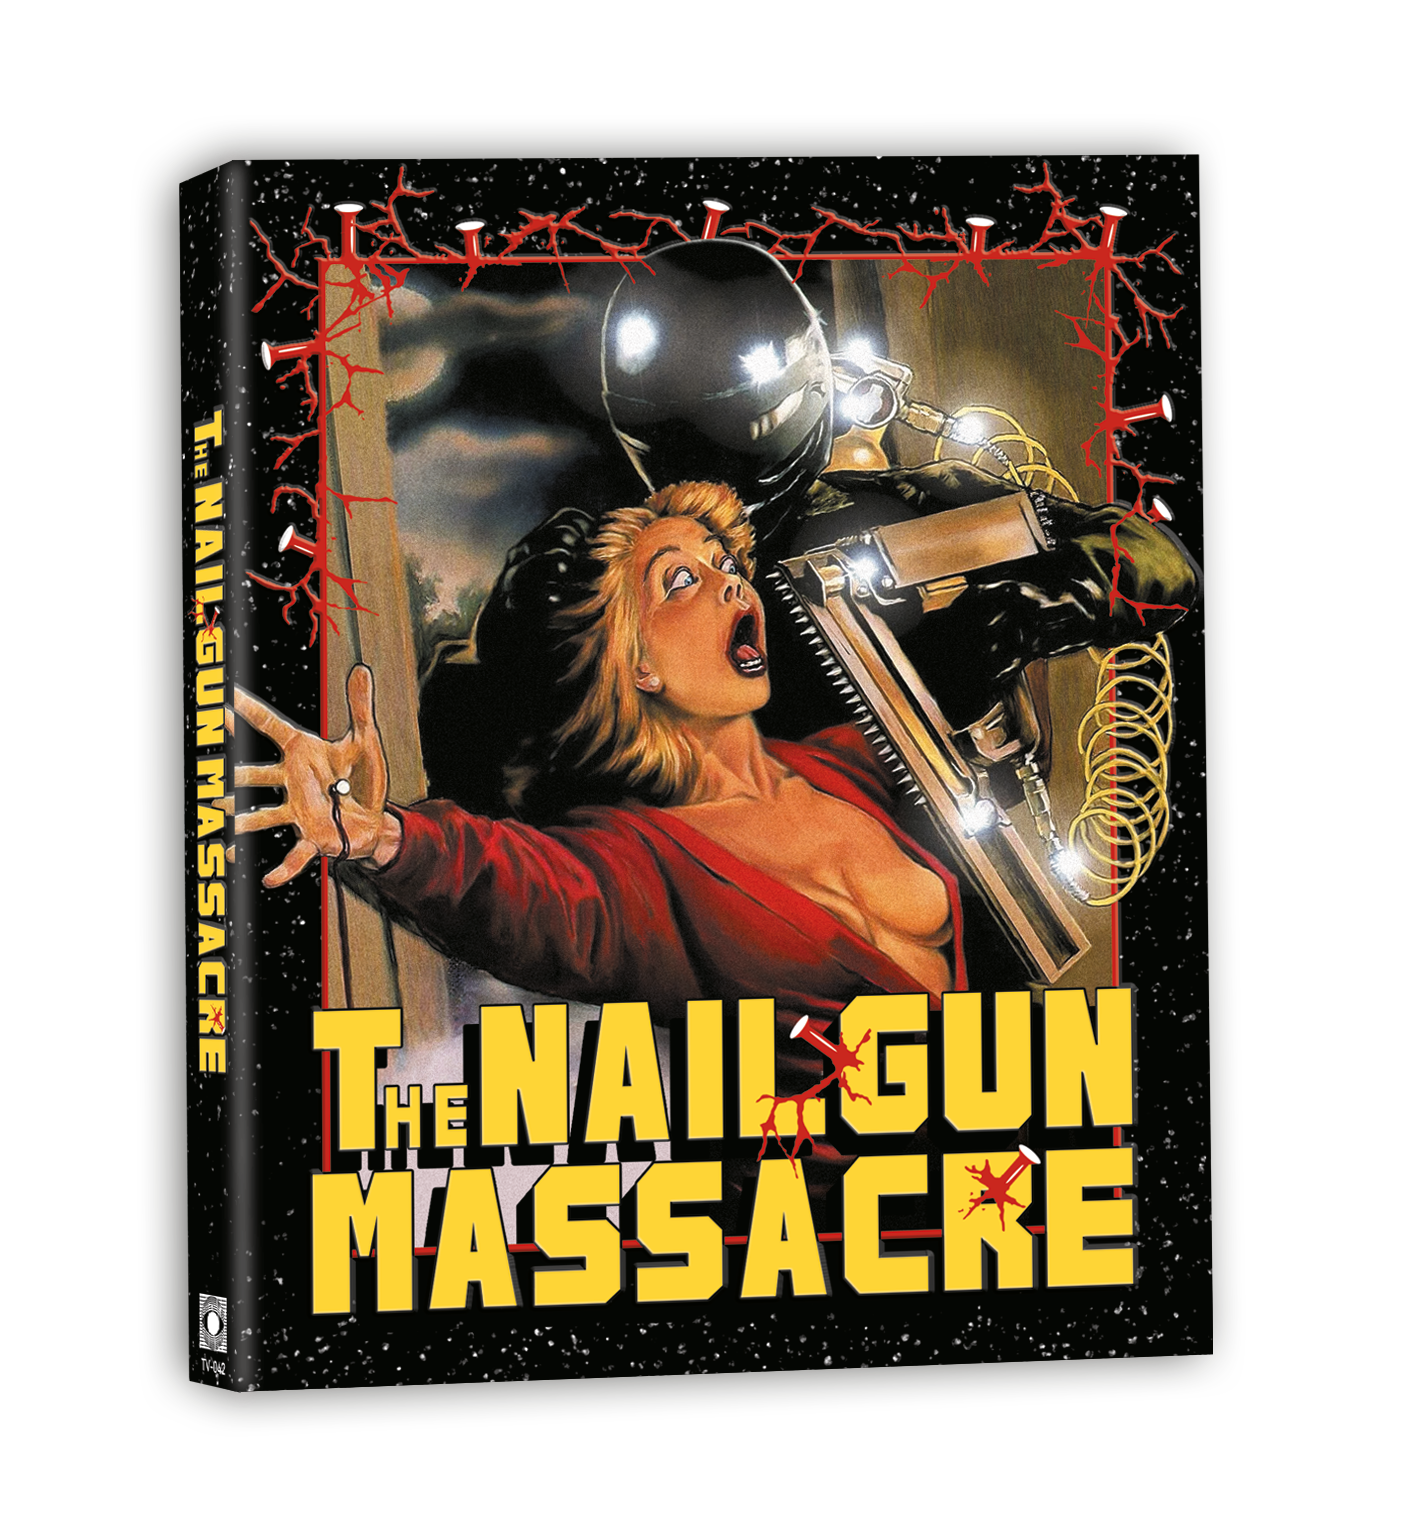 The Nail Gun Massacre (1985) 4K UHD blu-ray with slipcover